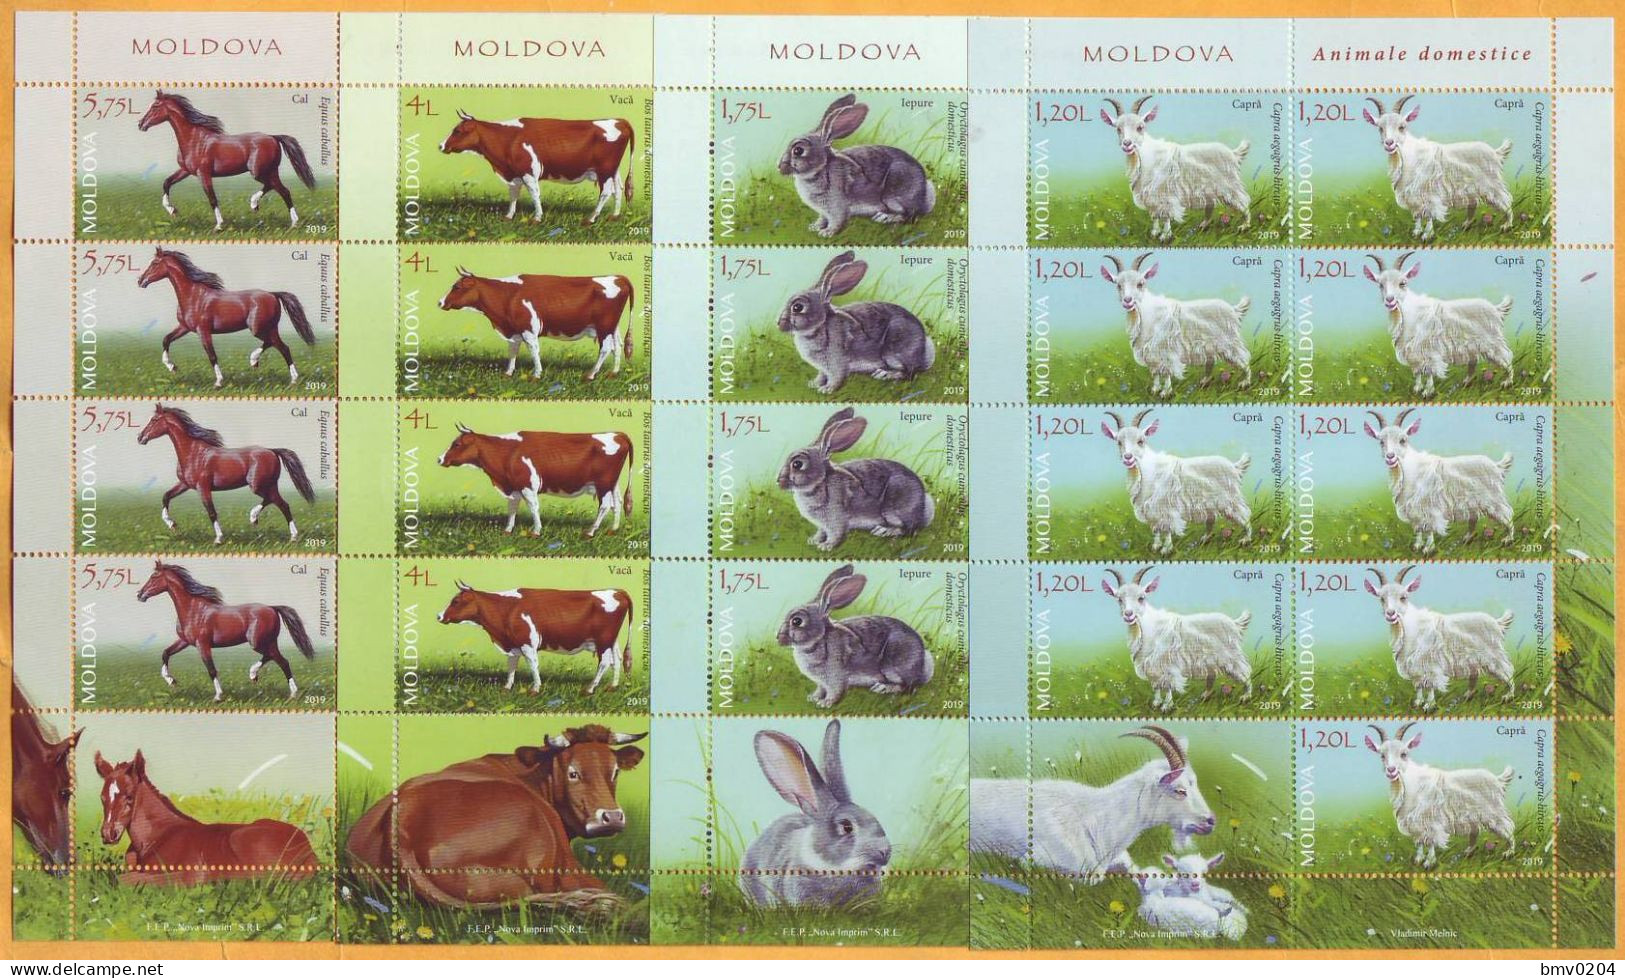 2019 Moldova Moldavie Fauna. Domestic Animals. Goat. Rabbit. Cow. Horse. 4 Sheets Mint - Farm